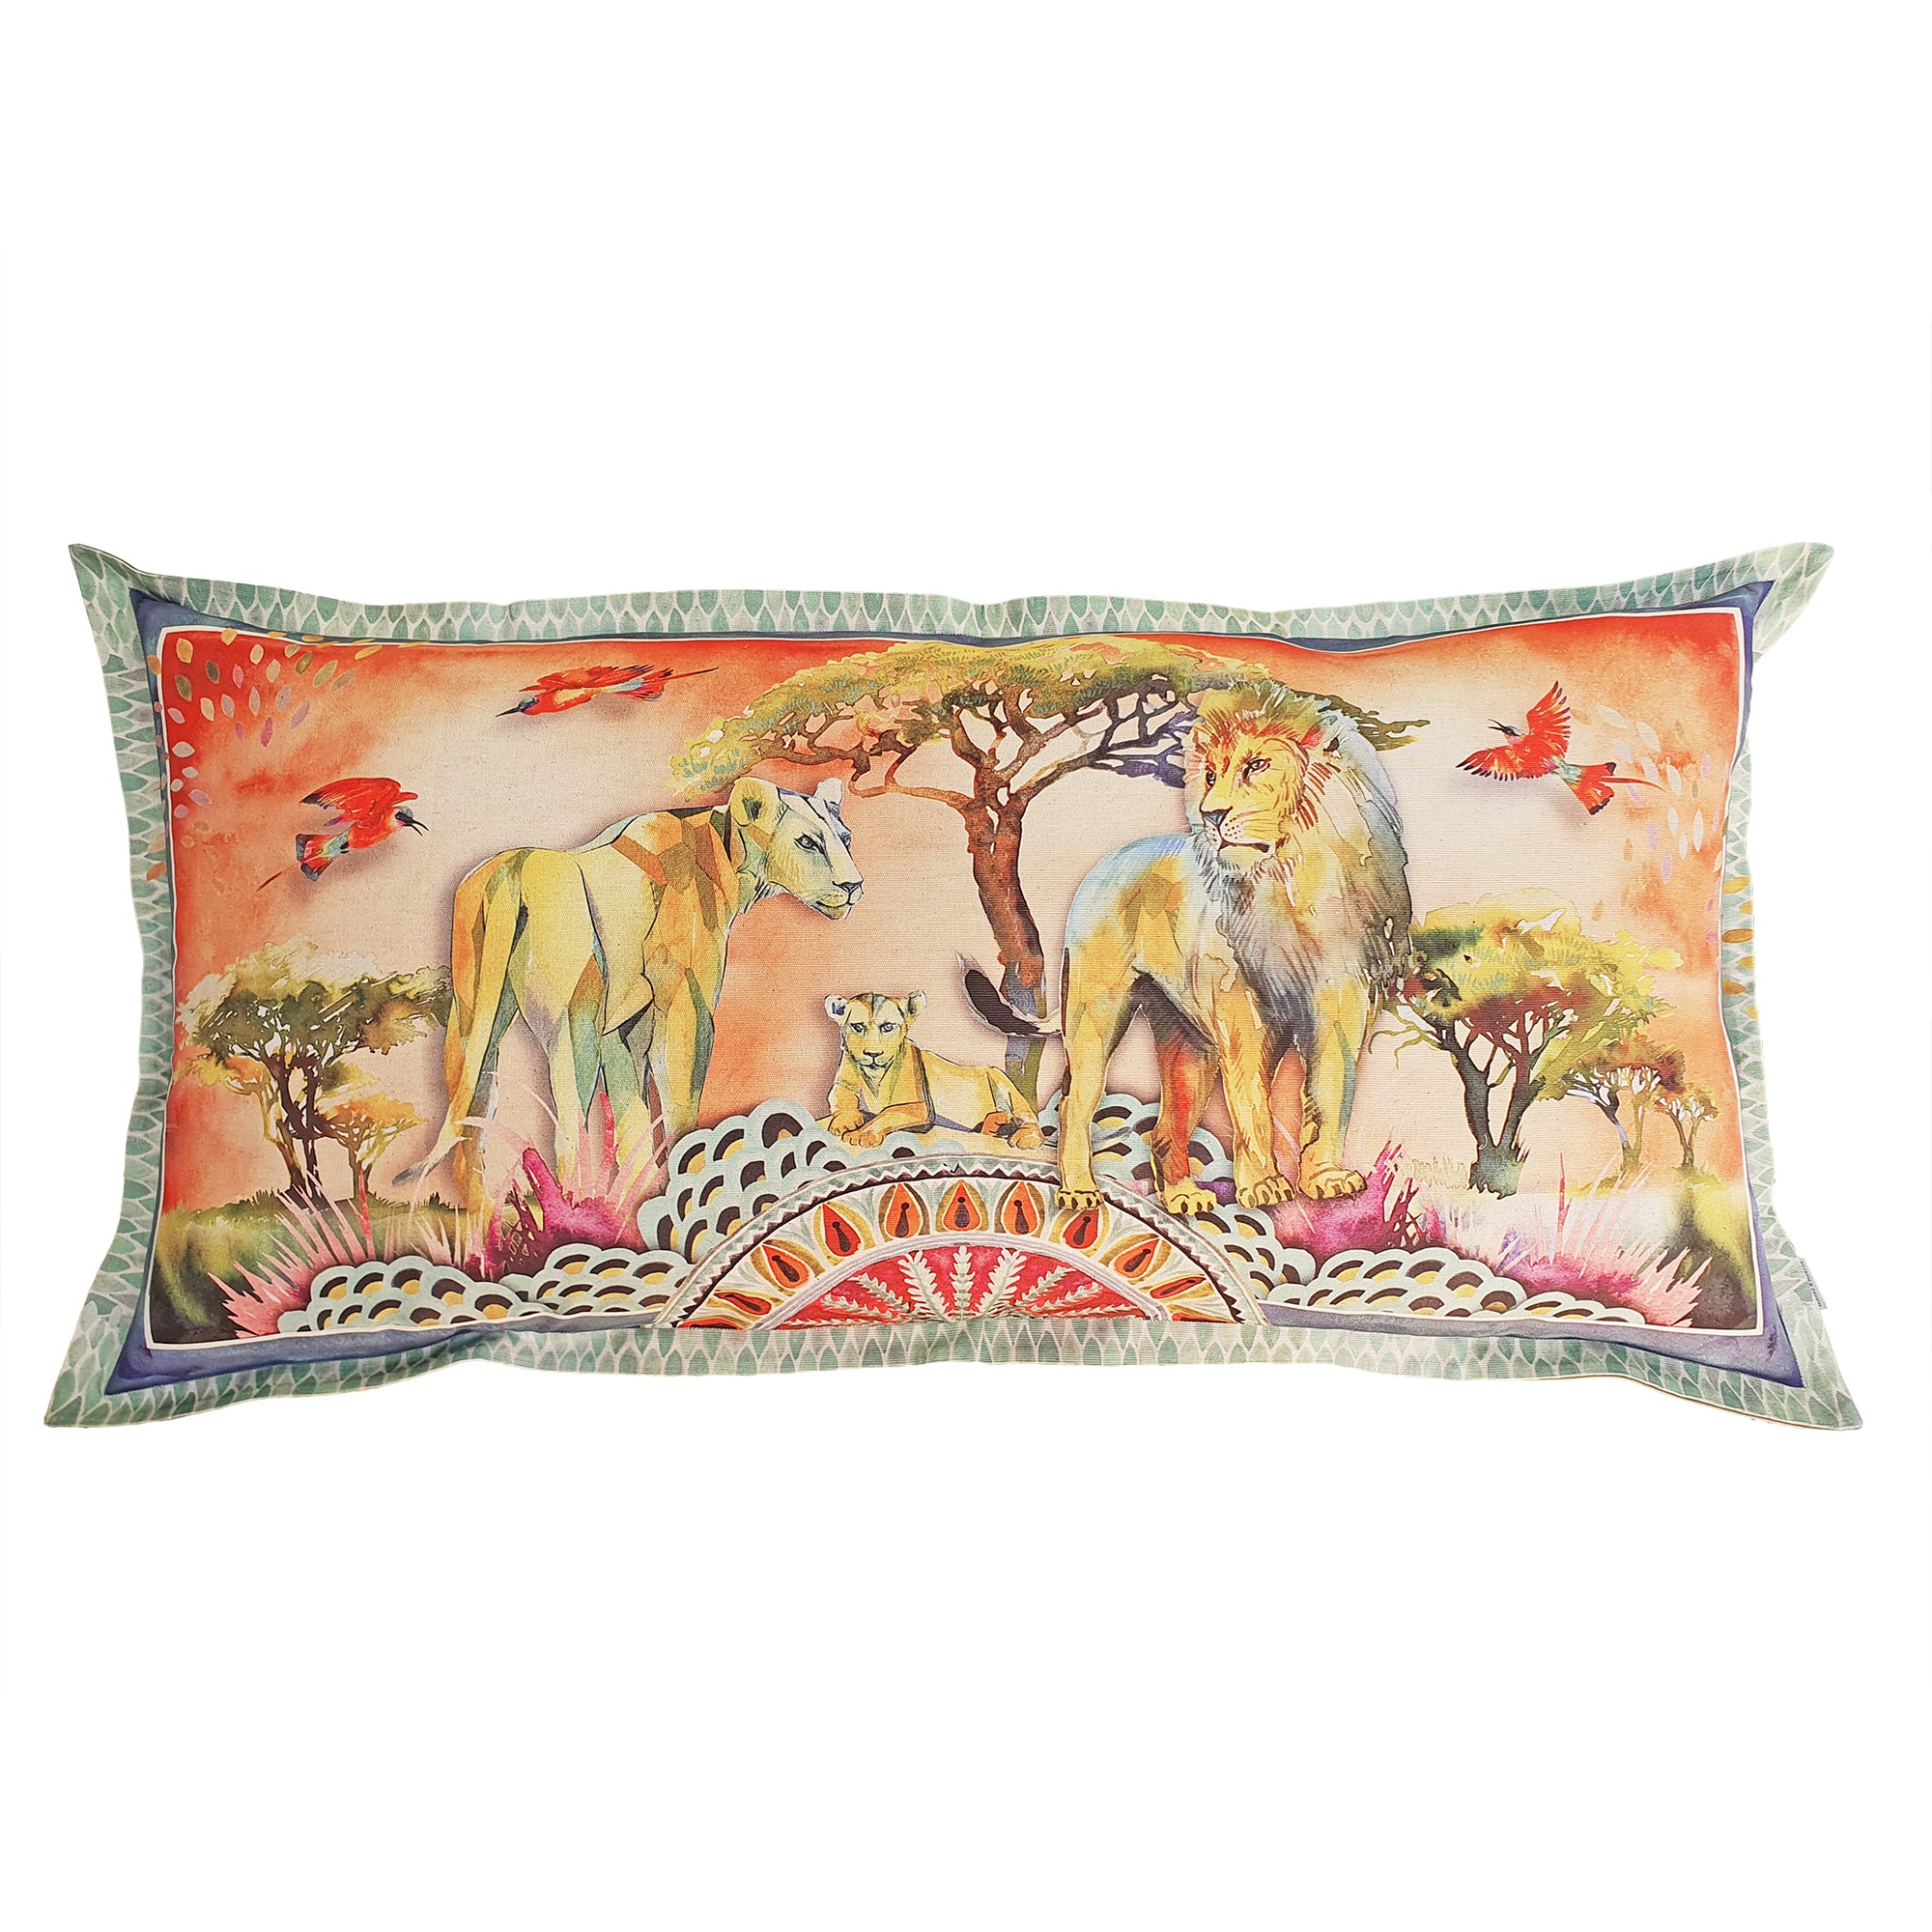 Sharon B Design cushion cover with Fiesta Lion print